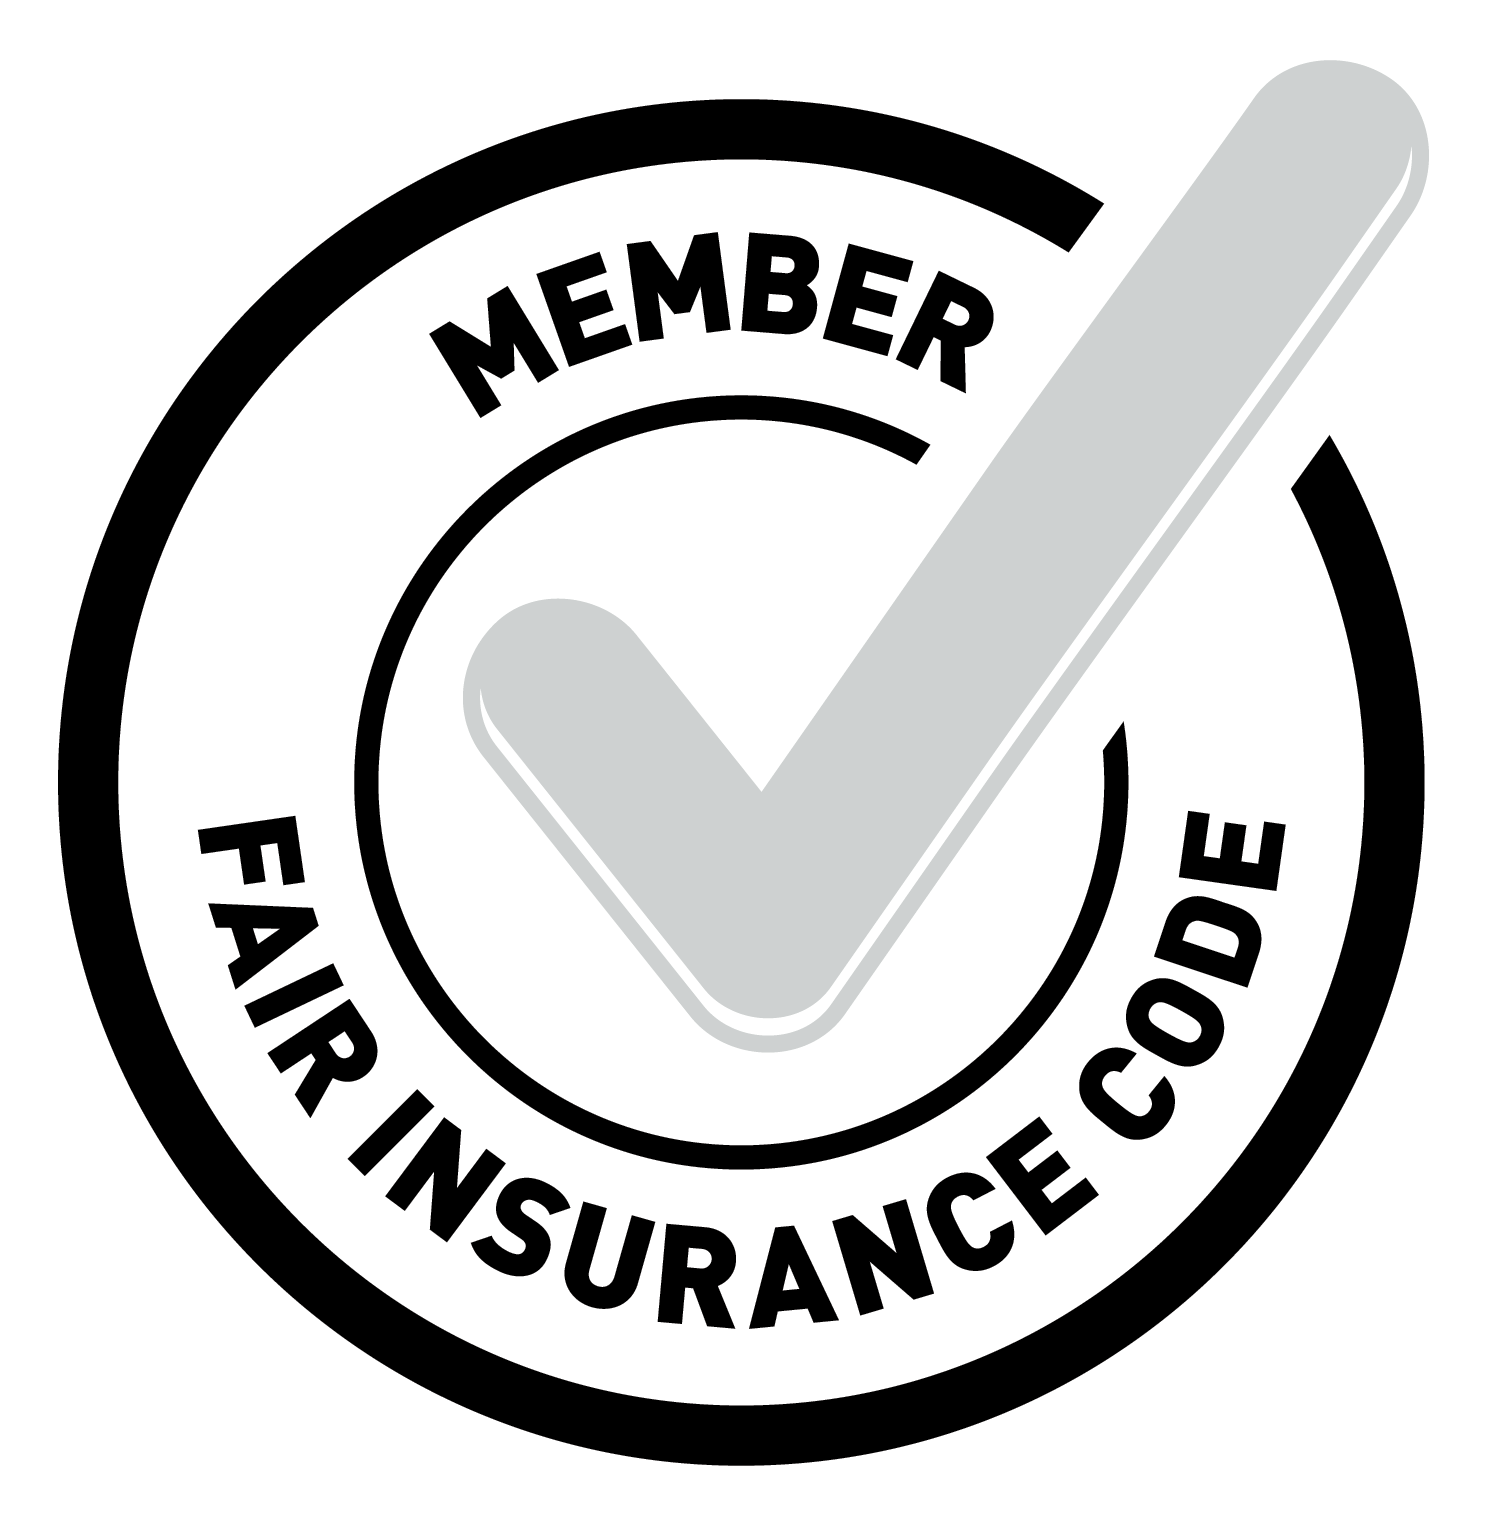 FEB 2019 Fair Insurance Code logo - CMYK@6x